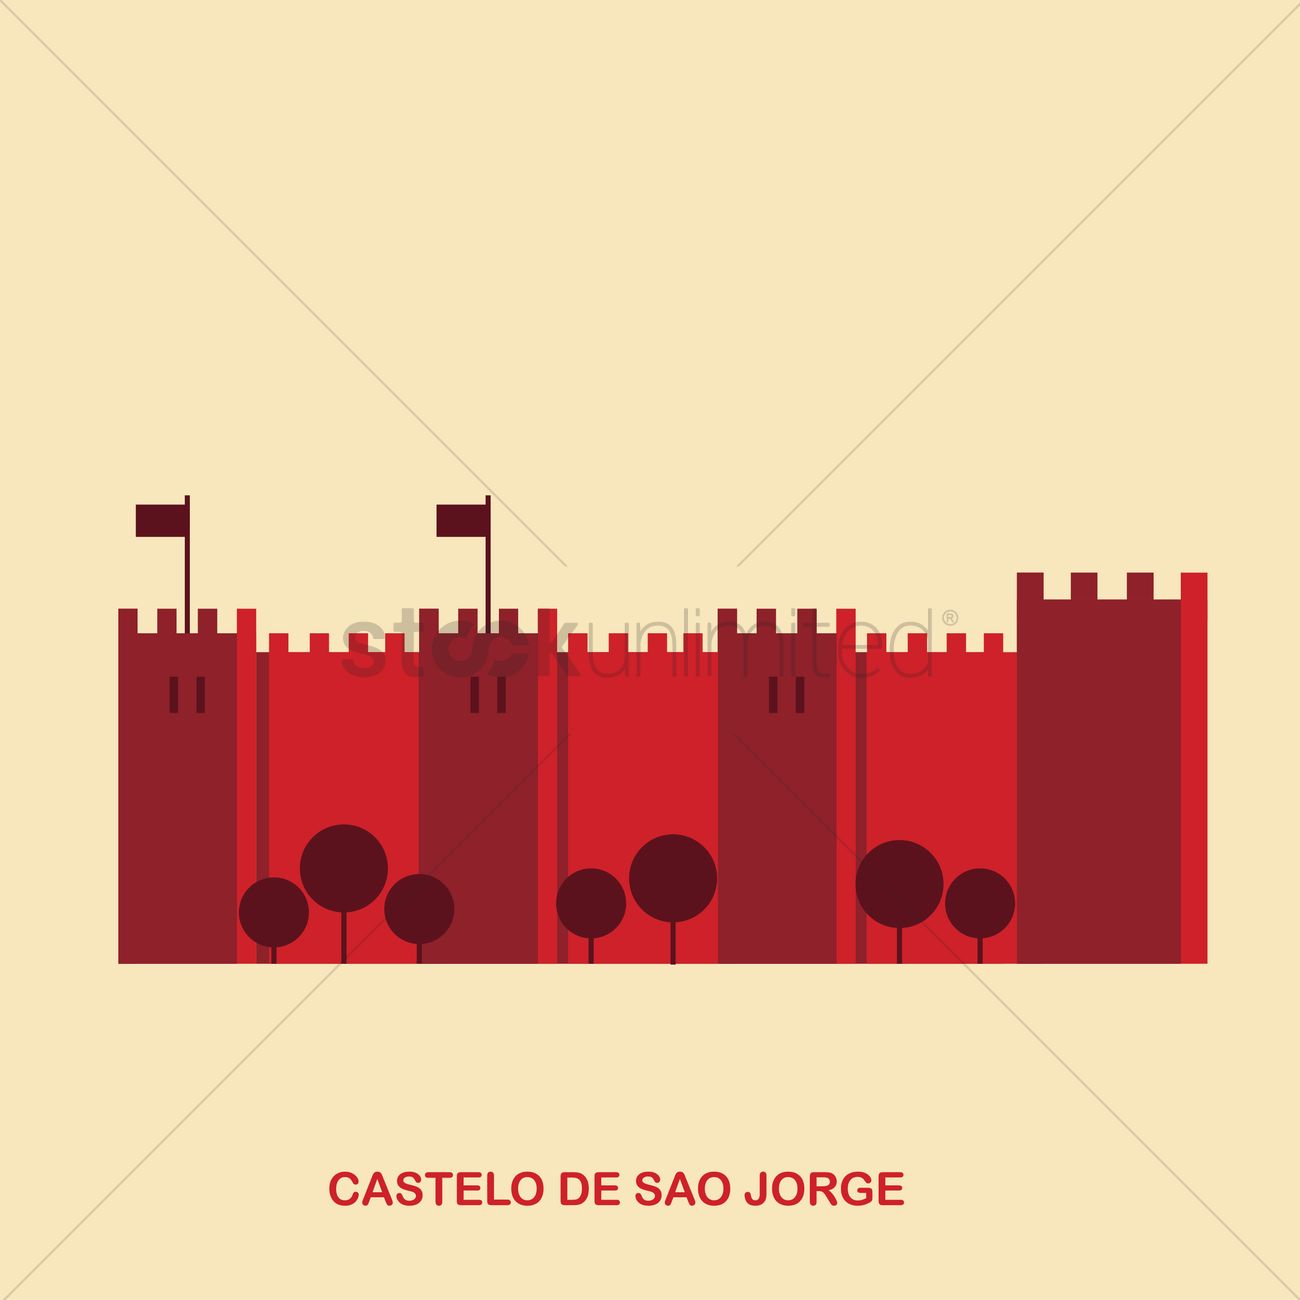 Castelo de sao jorge Vector Image.